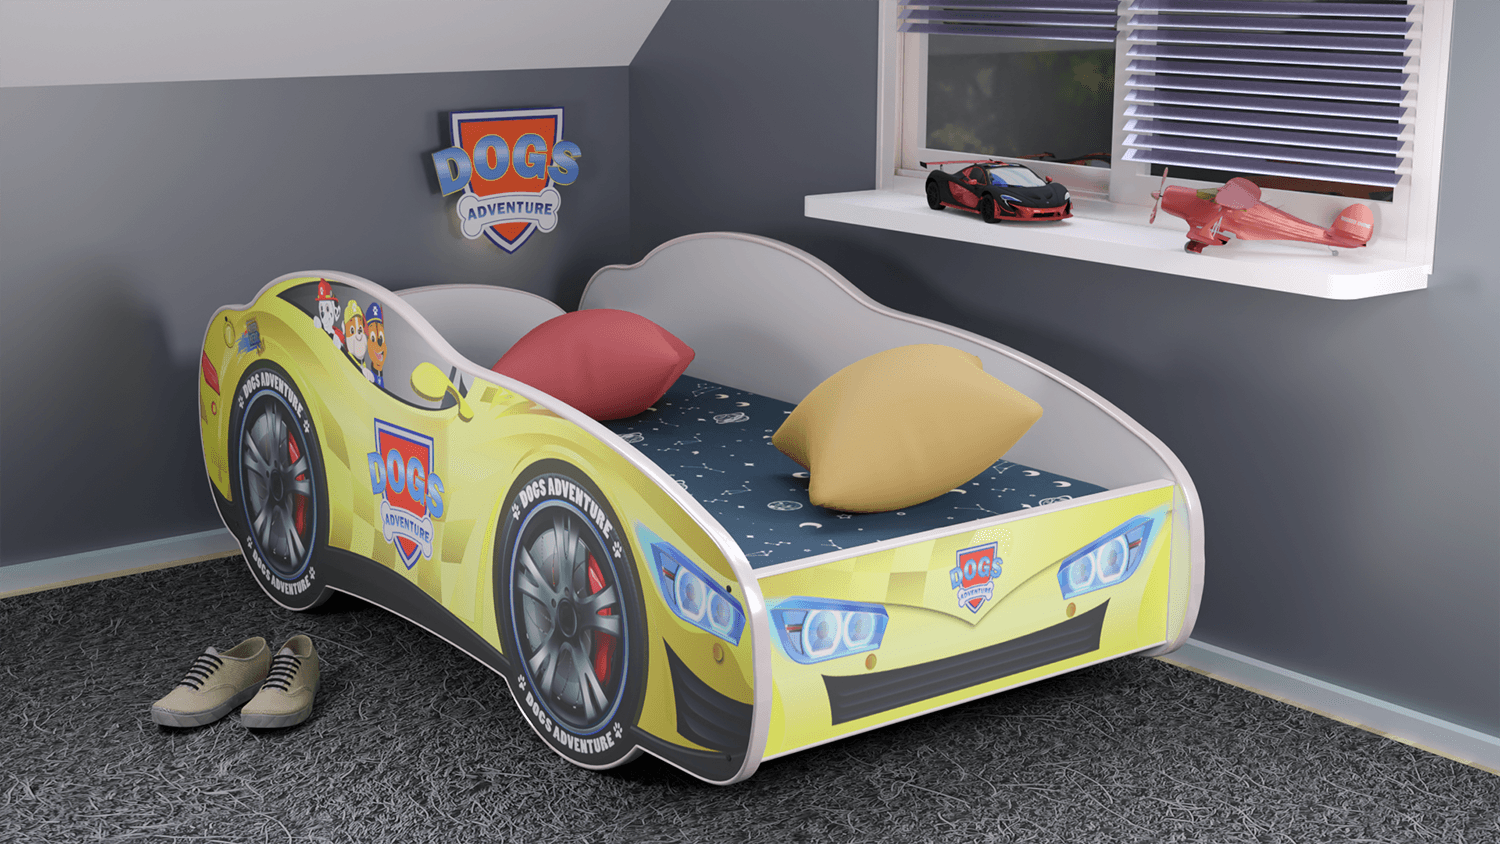 RACING CAR Dečiji krevet trkački auto Dog Adventure 160x80cm žuti